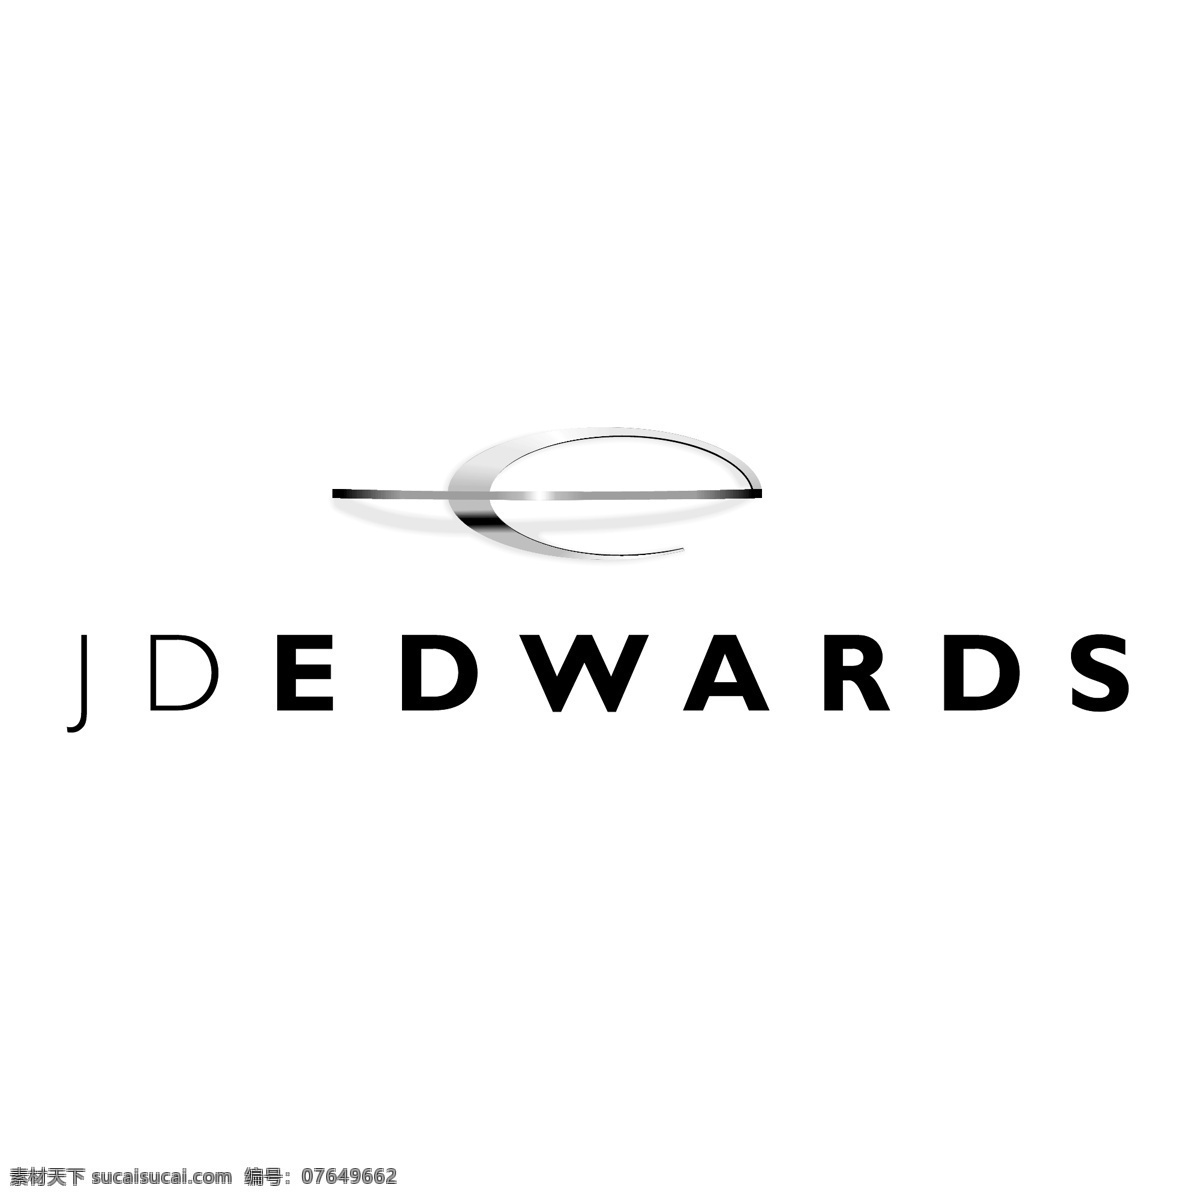 jd 爱德华兹 向量 标志 爱德华兹标志 矢量 矢量标志jd jd设计 矢量矢量jd 矢量图 建筑家居